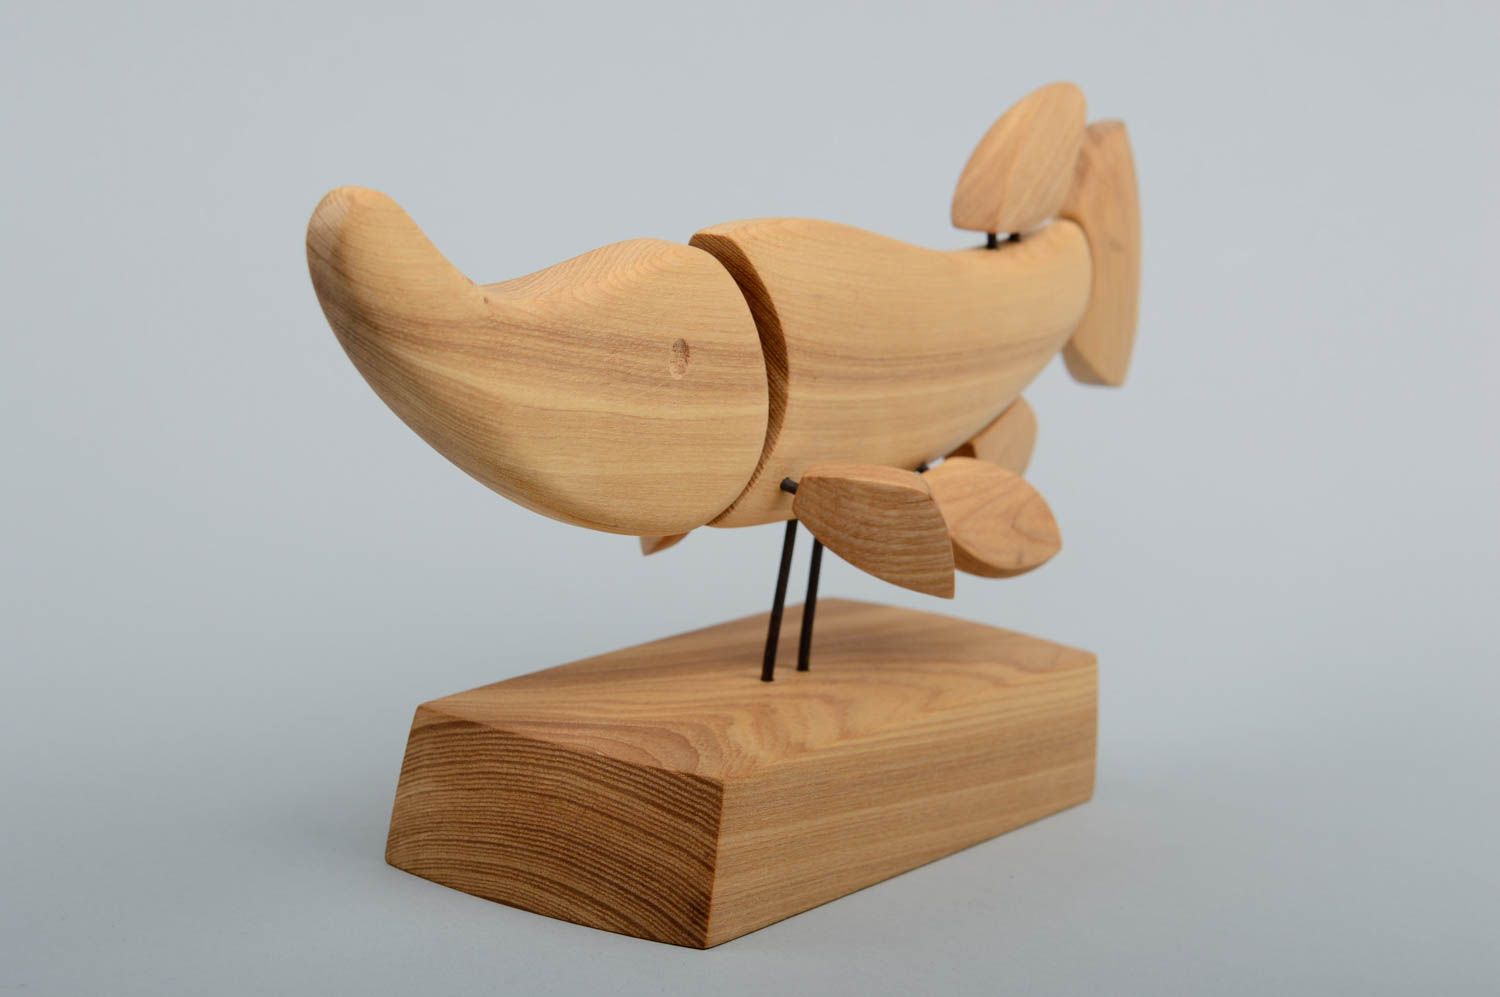 Wooden sculpture wood toy handmade home decor wooden gifts souvenir ideas photo 2